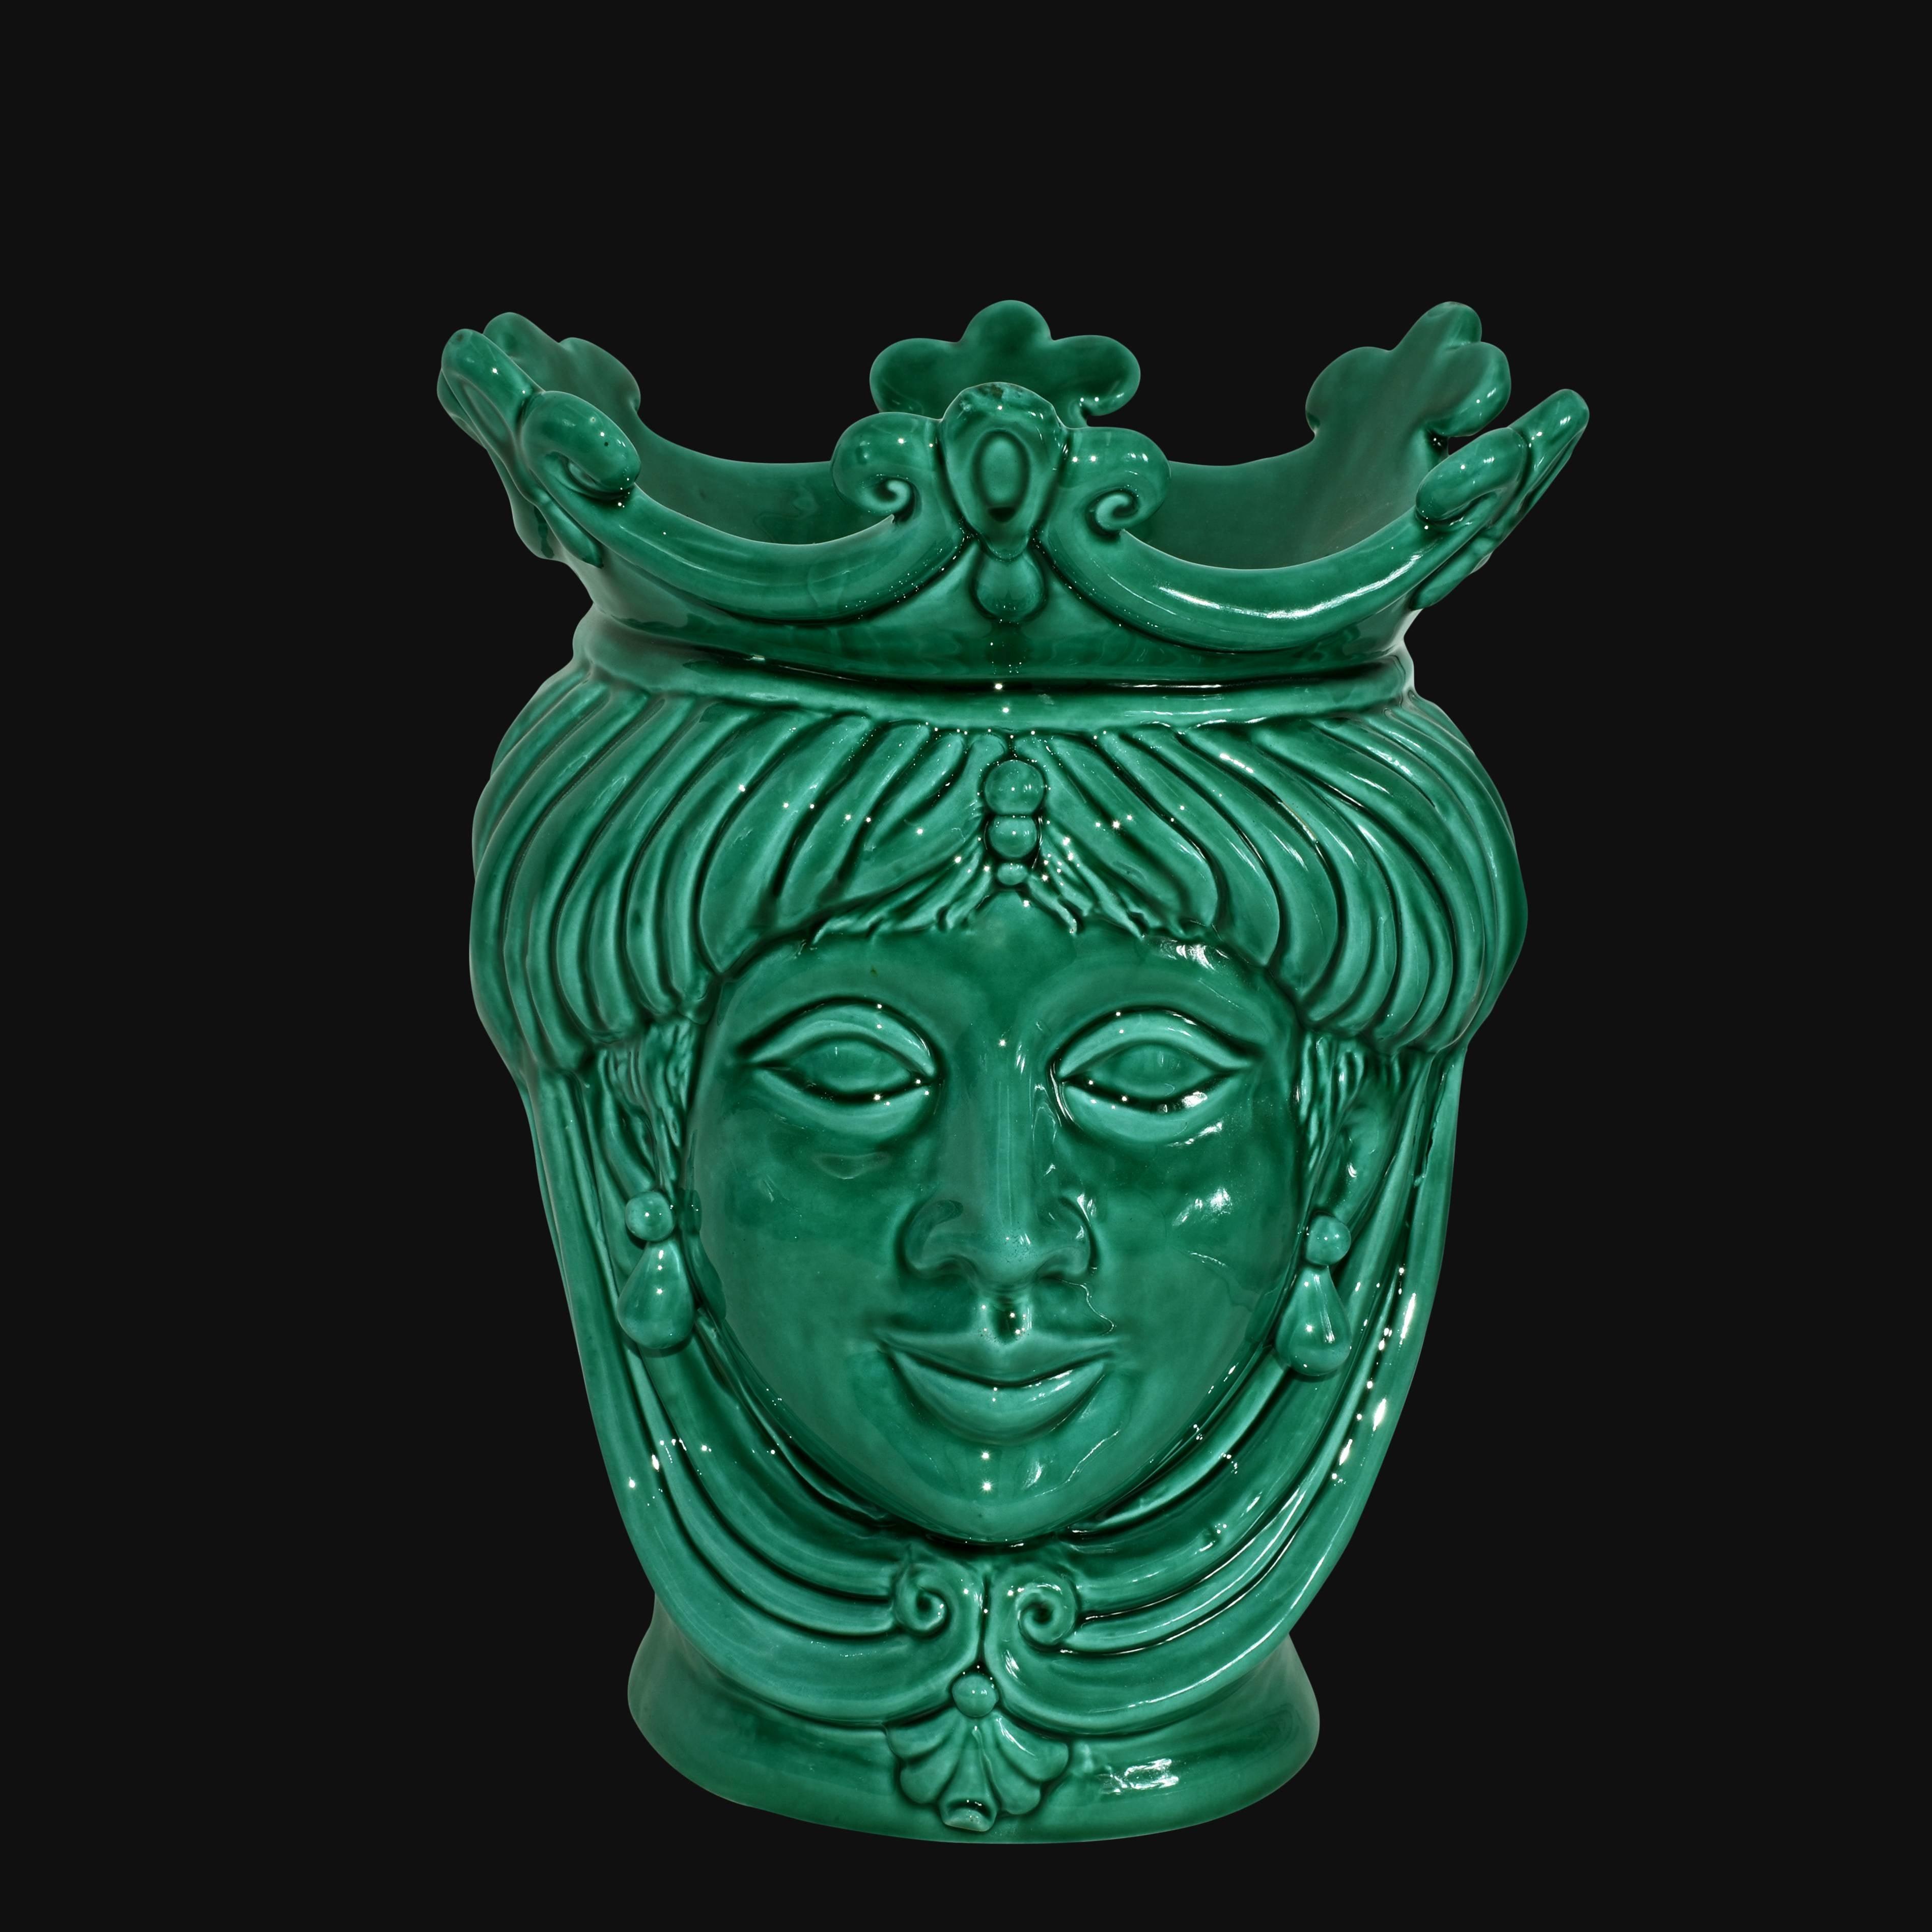 Testa h 25 liscia Verde Smeraldo femmina - Ceramiche di Caltagirone Sofia